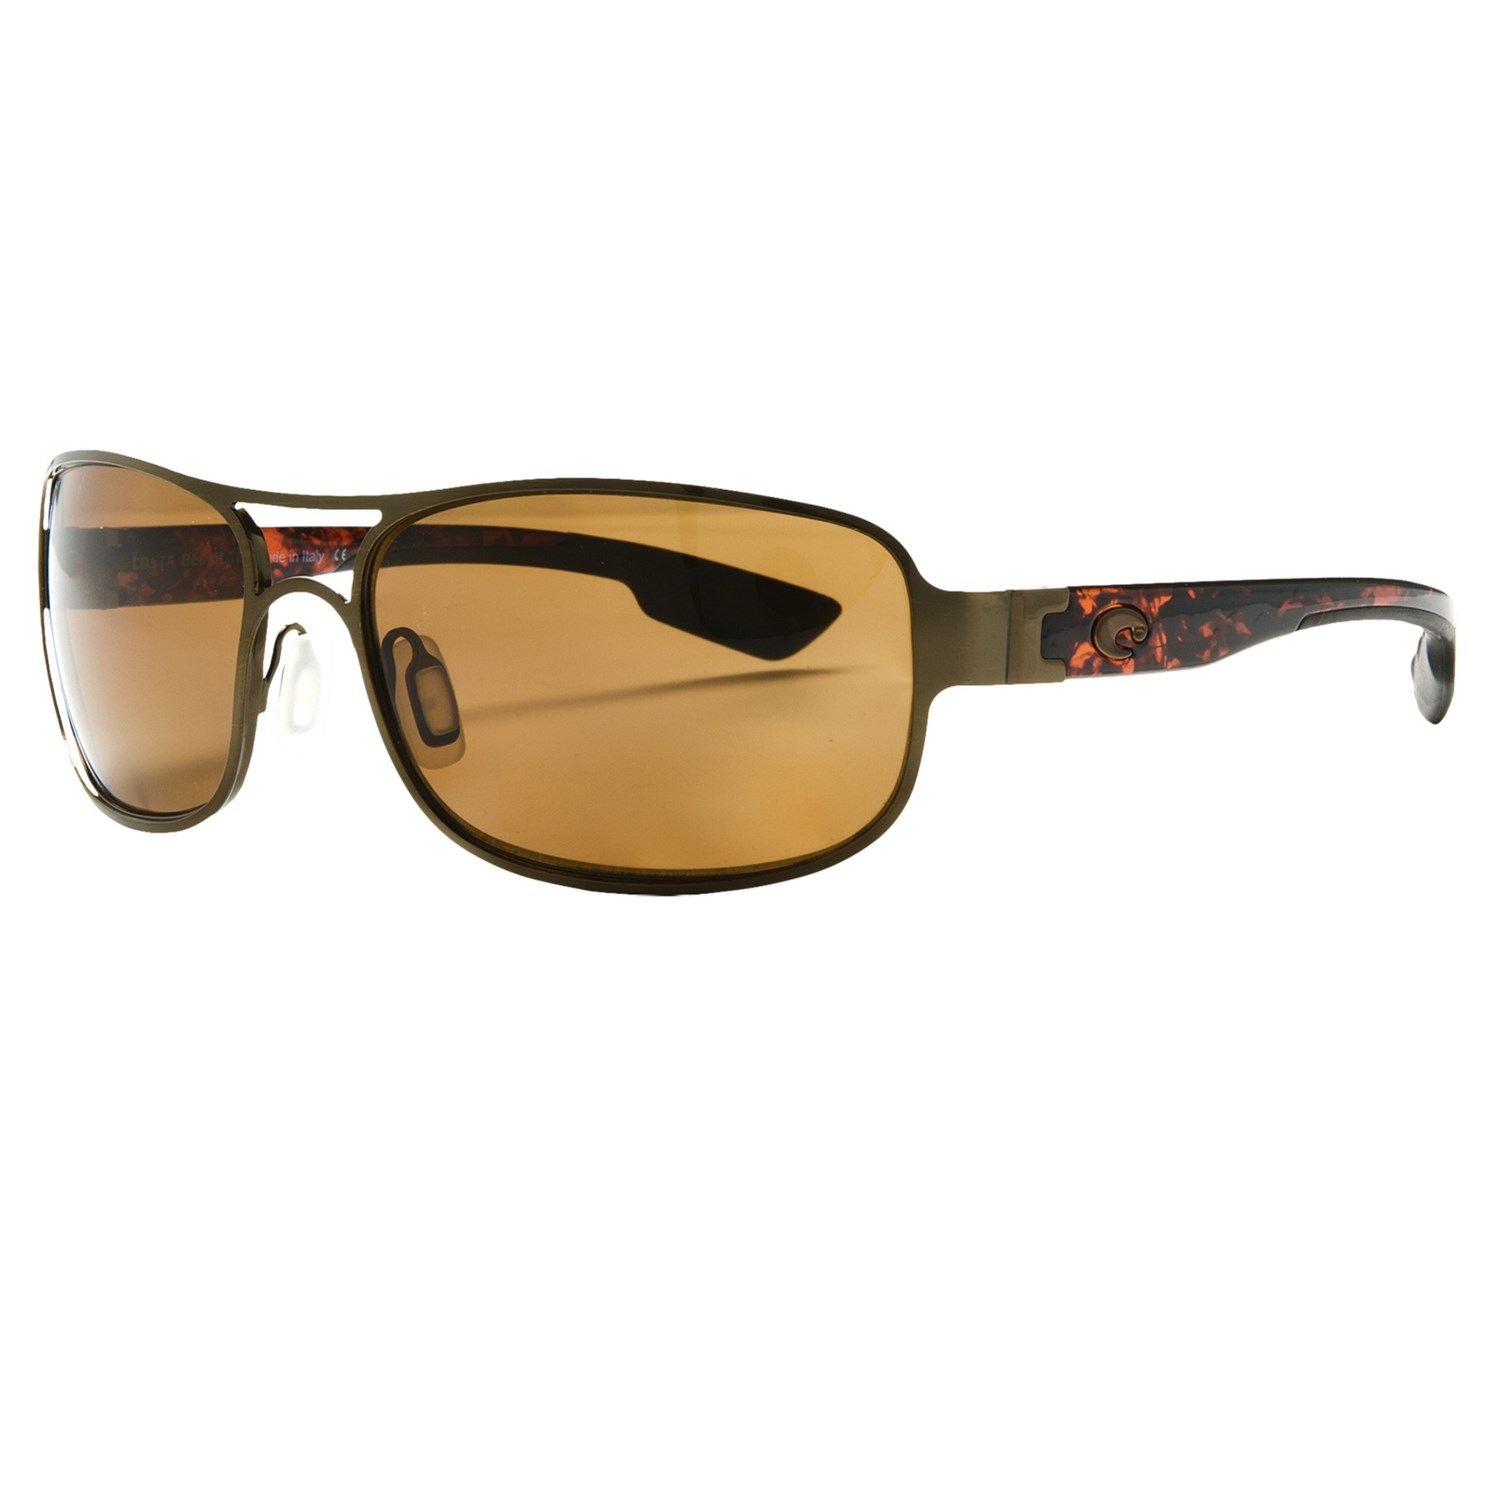 Costa Grand Isle Sunglasses - Polarized, 580P Lenses - Save 39%